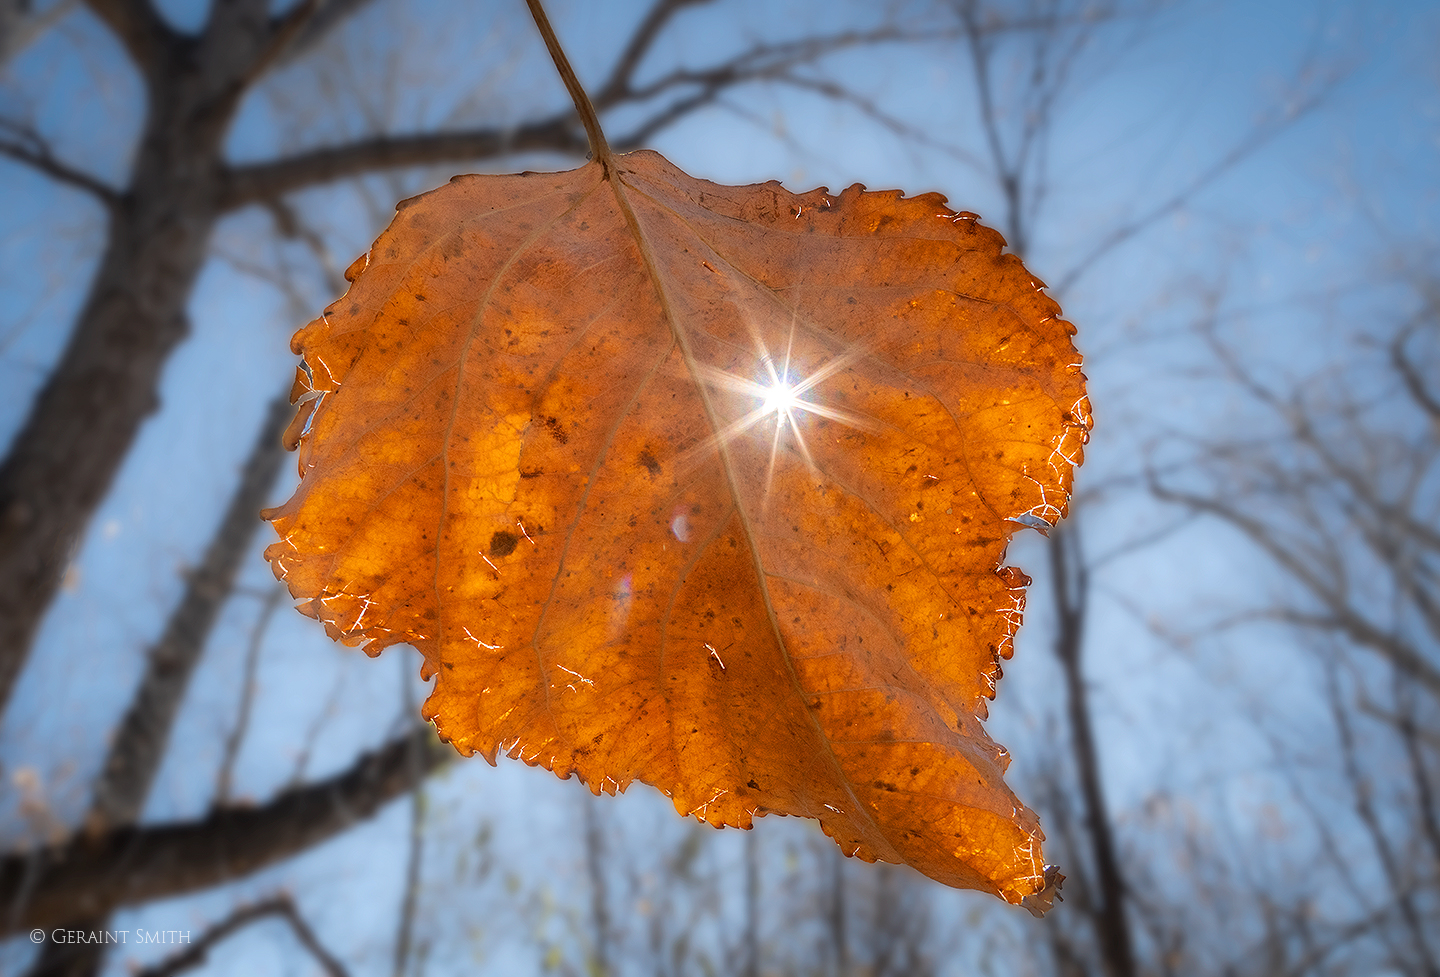 Cottonwood Leaf and a sun star